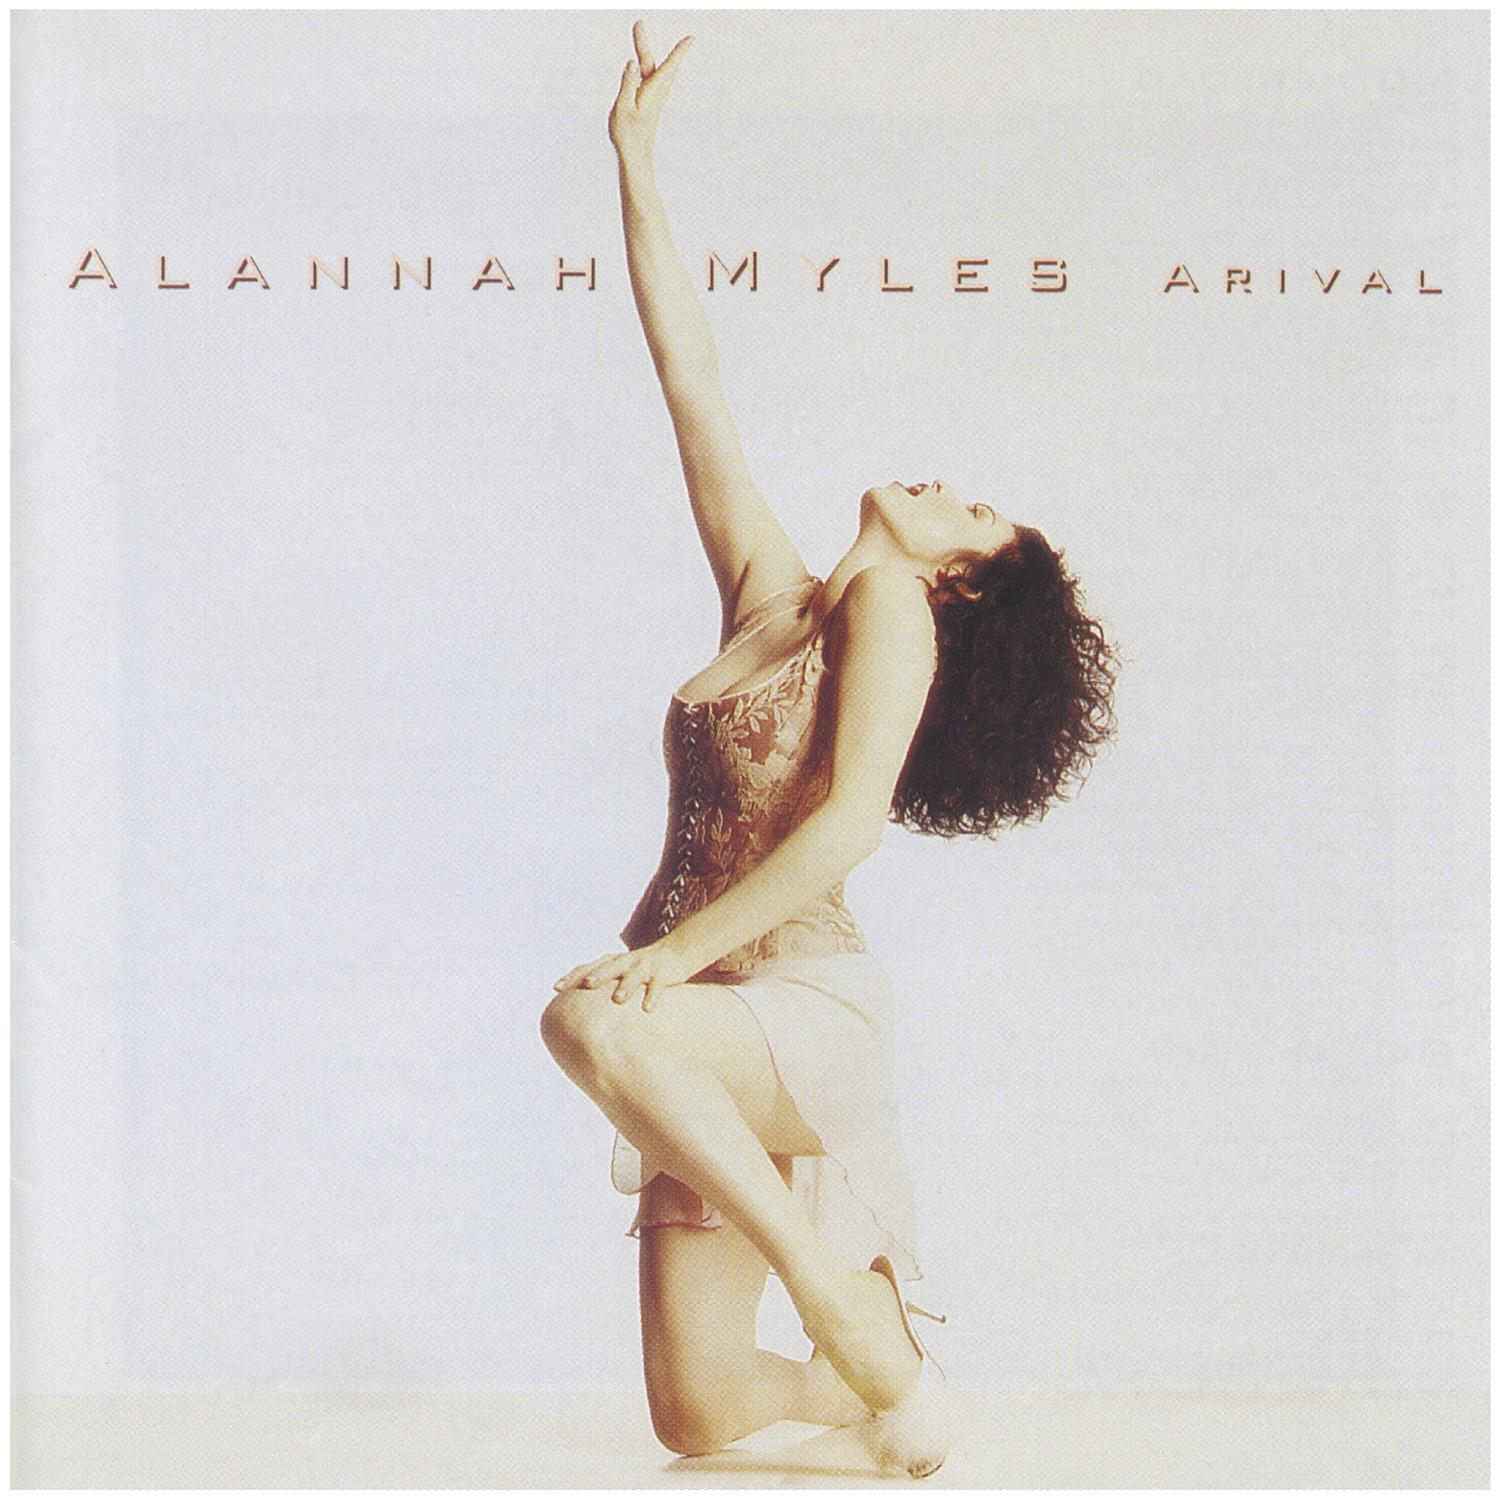 歌曲名《Motherload》，由 Alannah Myles 演唱，收录于《A Rival》专辑中.